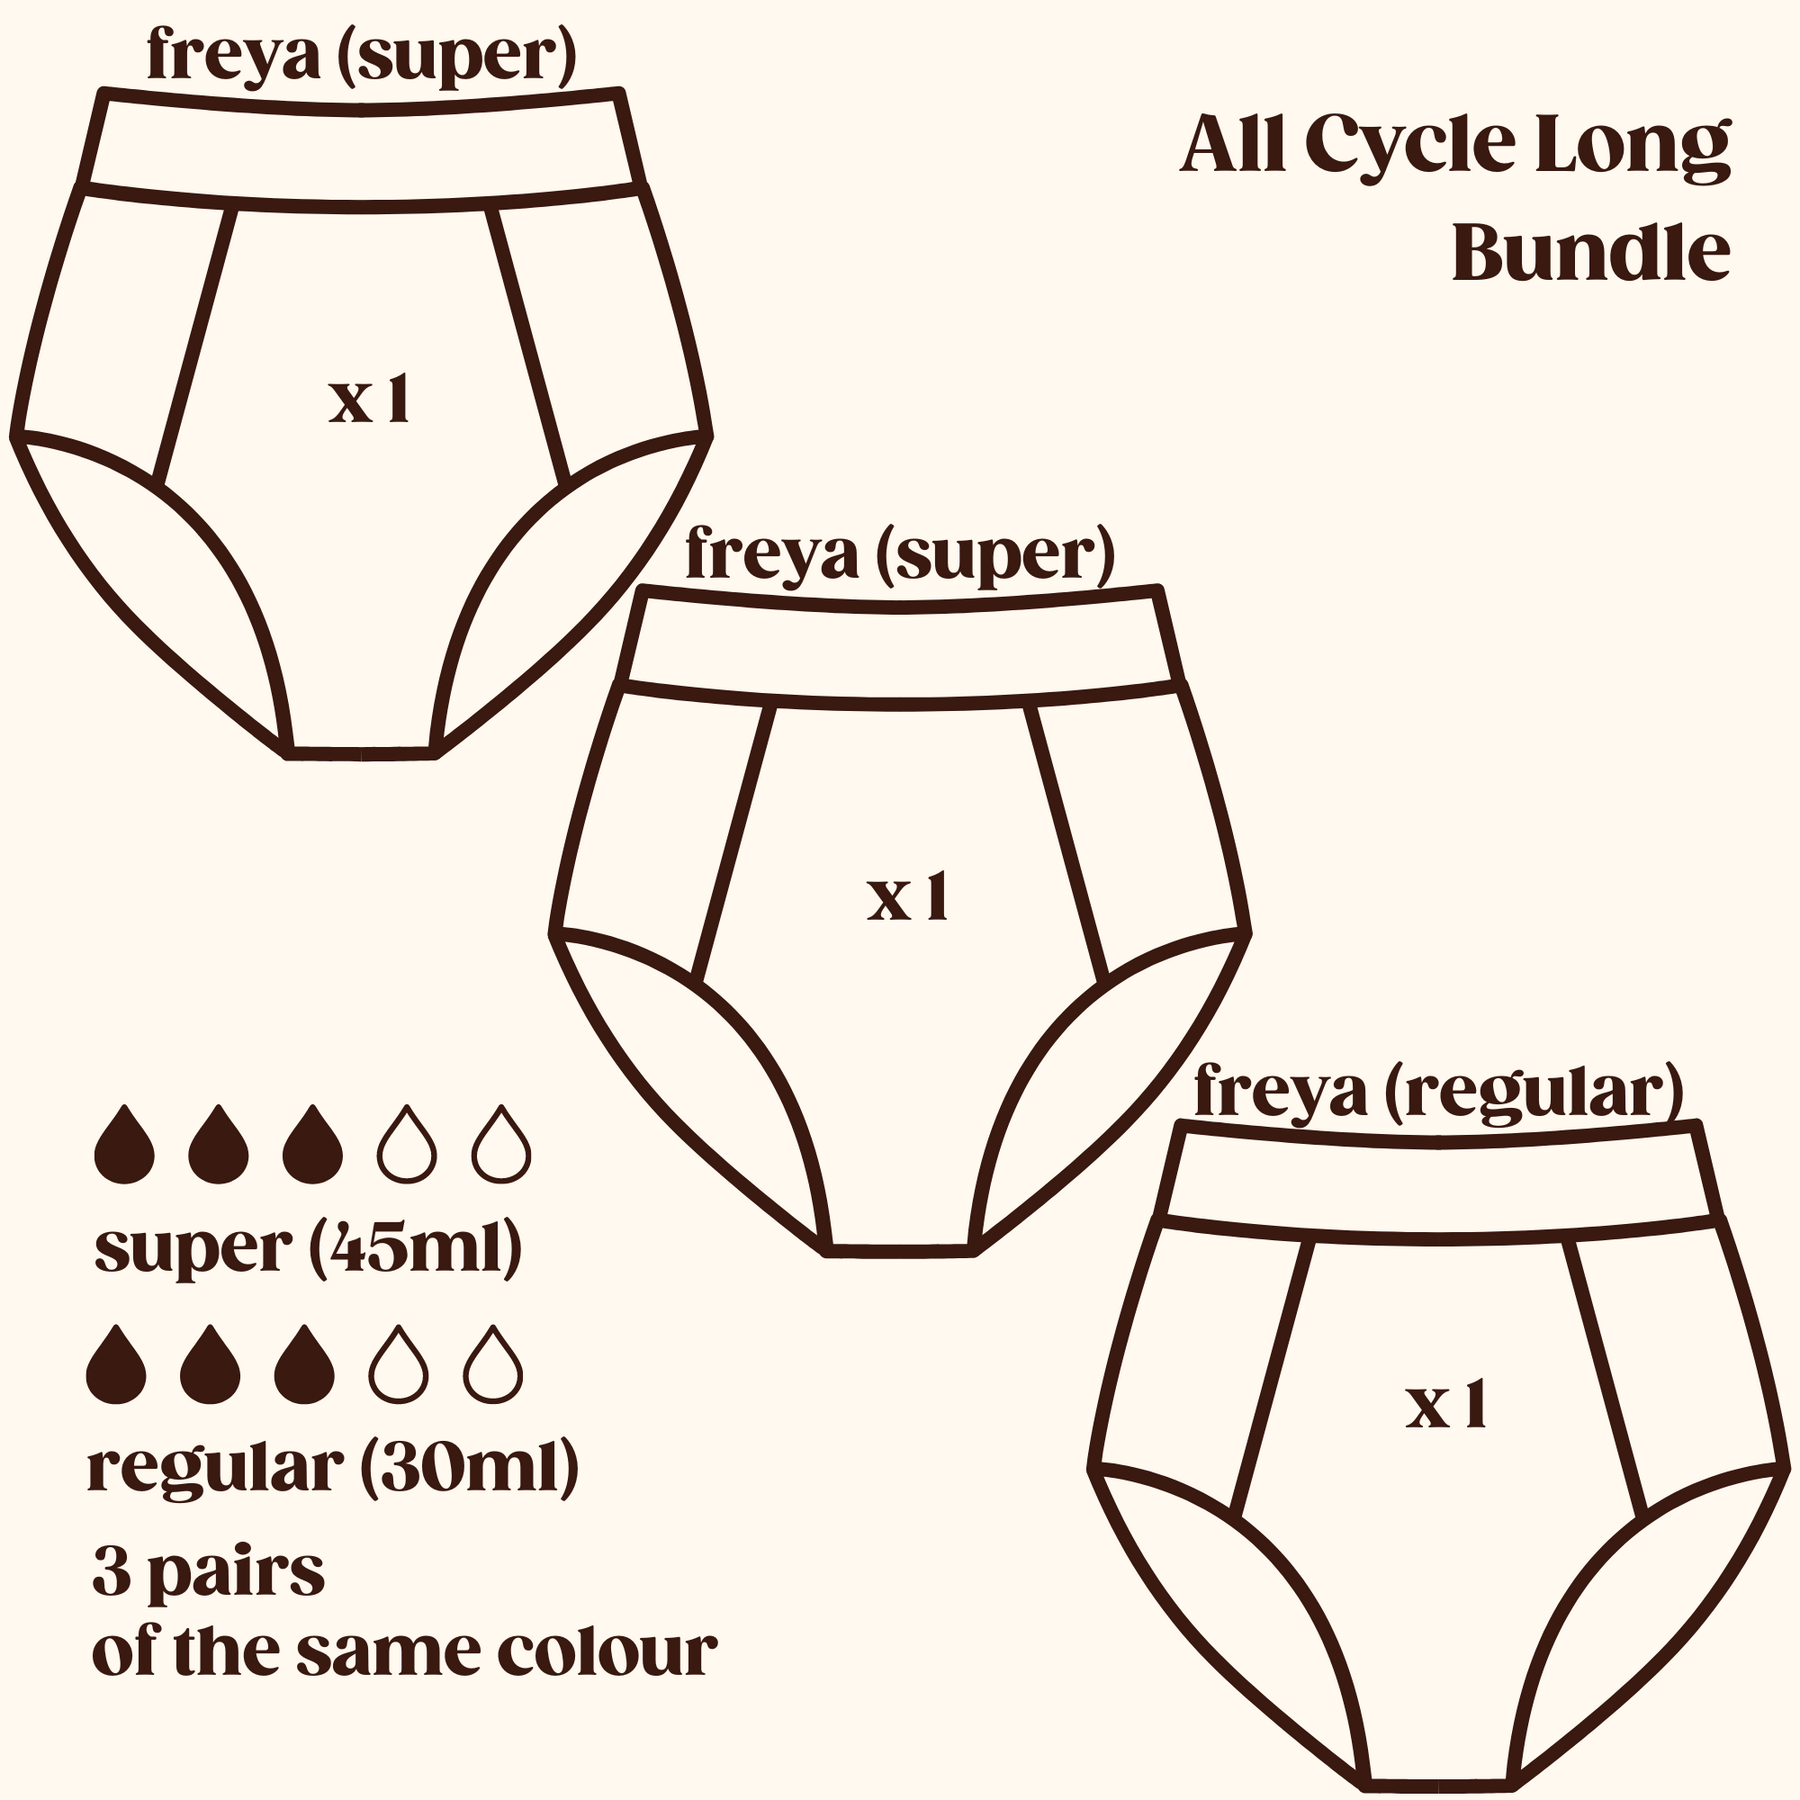 All Cycle Long Bundle (3 Freyas)